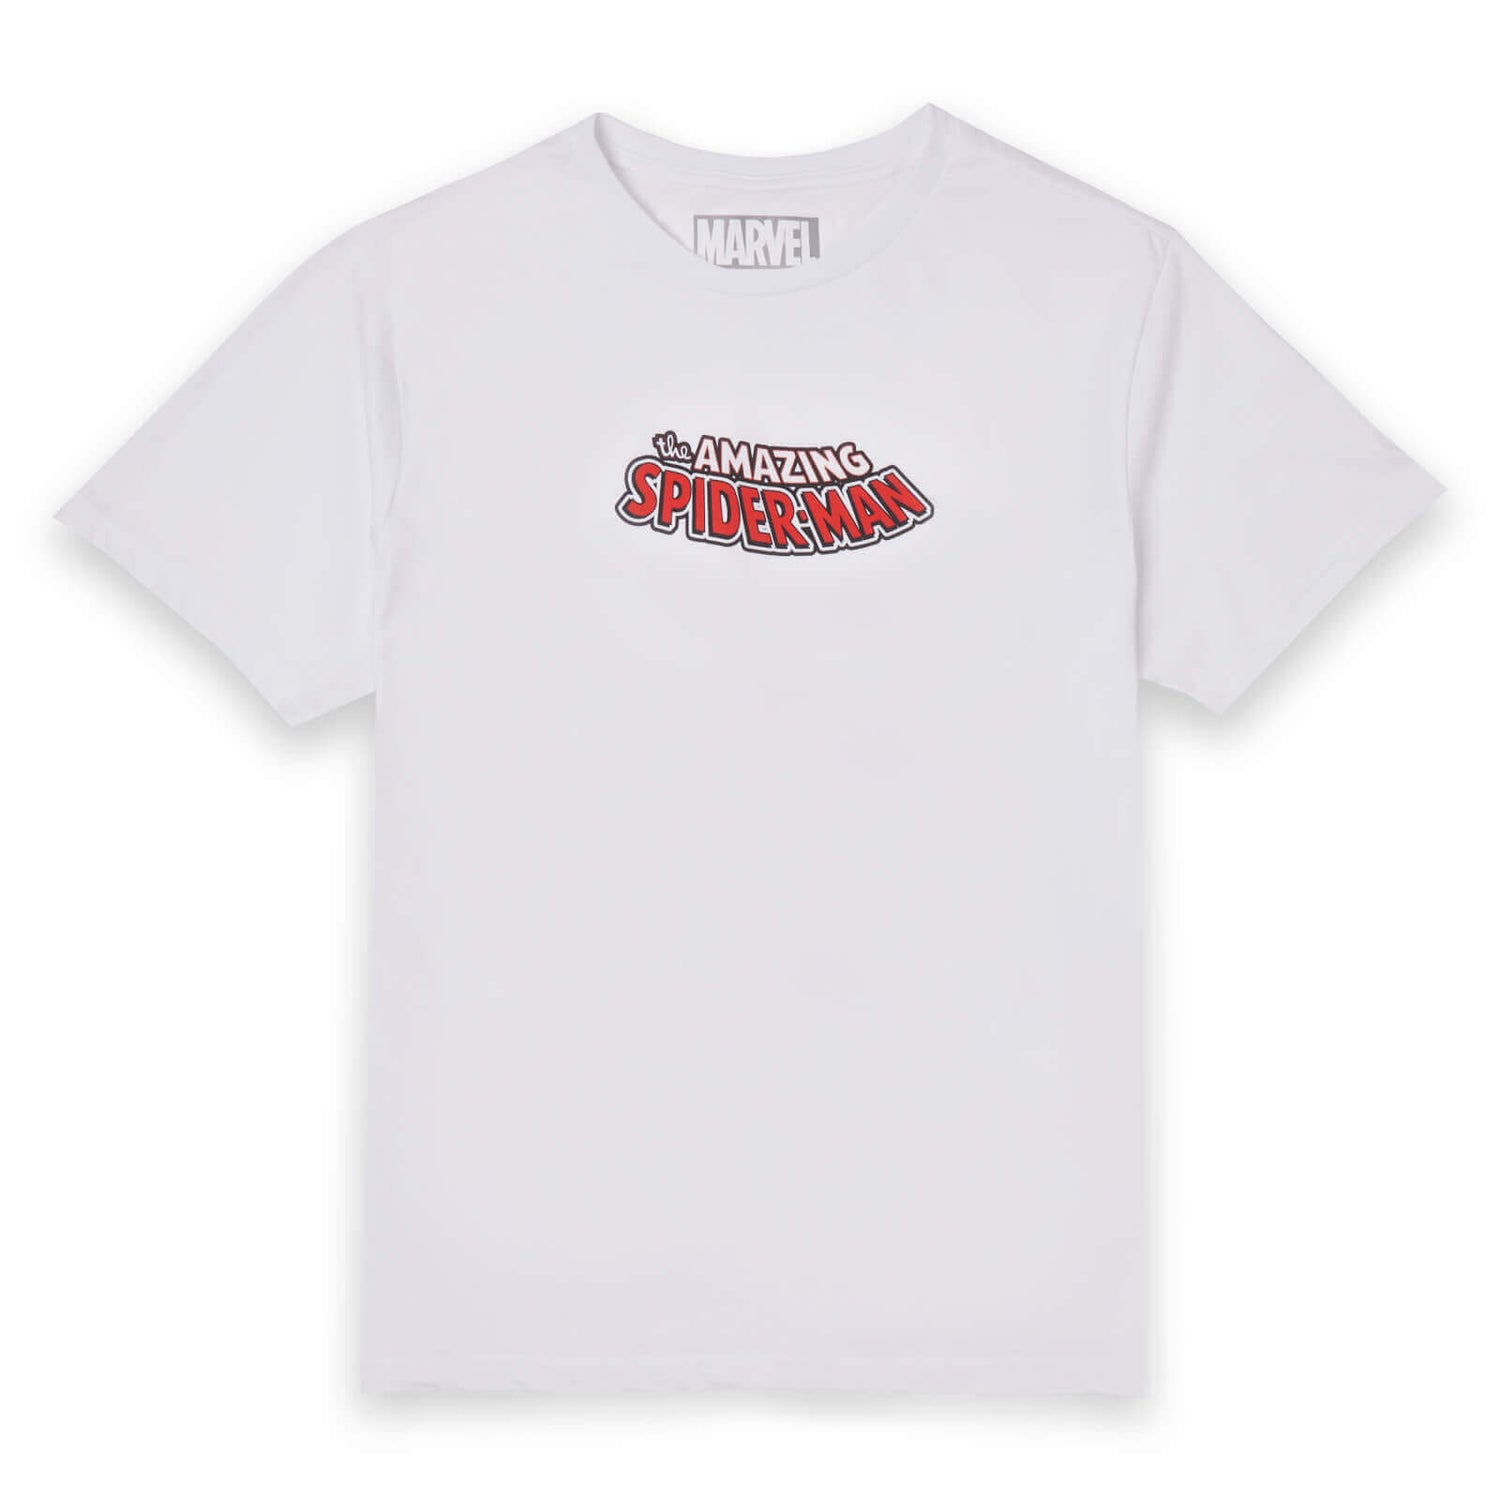 Camiseta The Amazing Spiderman para niño de Marvel - Blanco